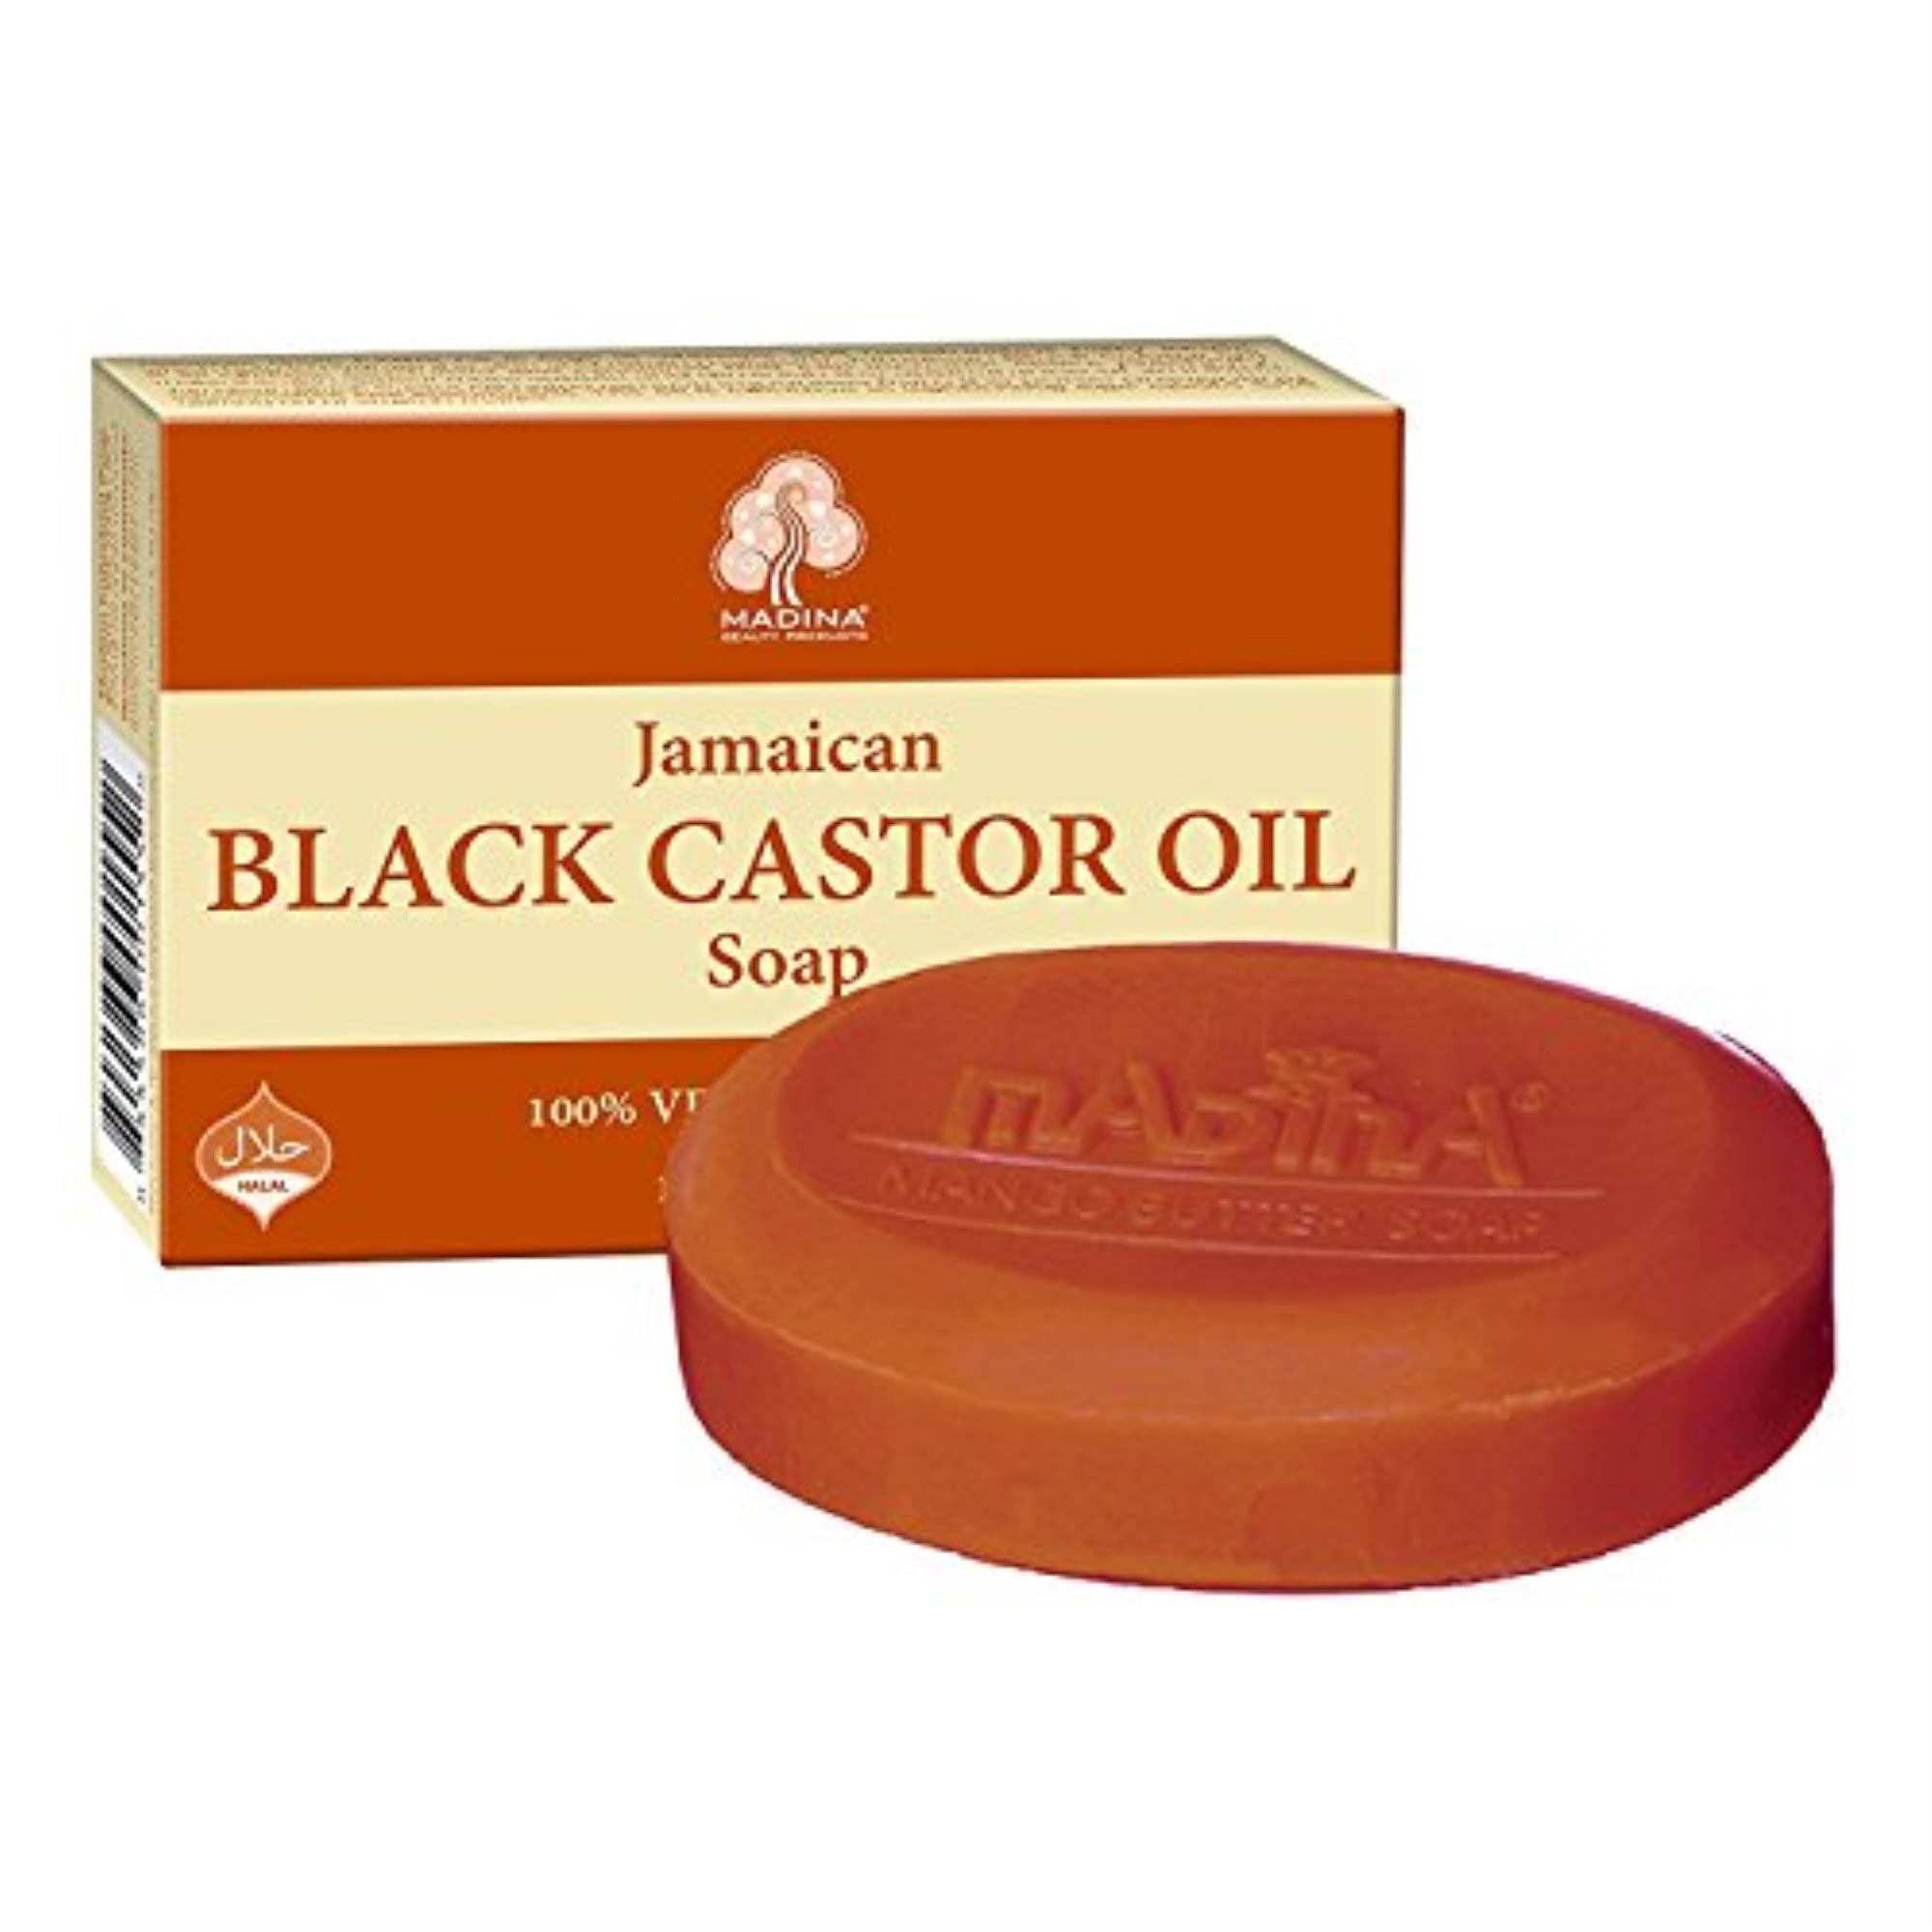 Madina Jamaican Black Castor Oil Soap Bar - 3.5oz